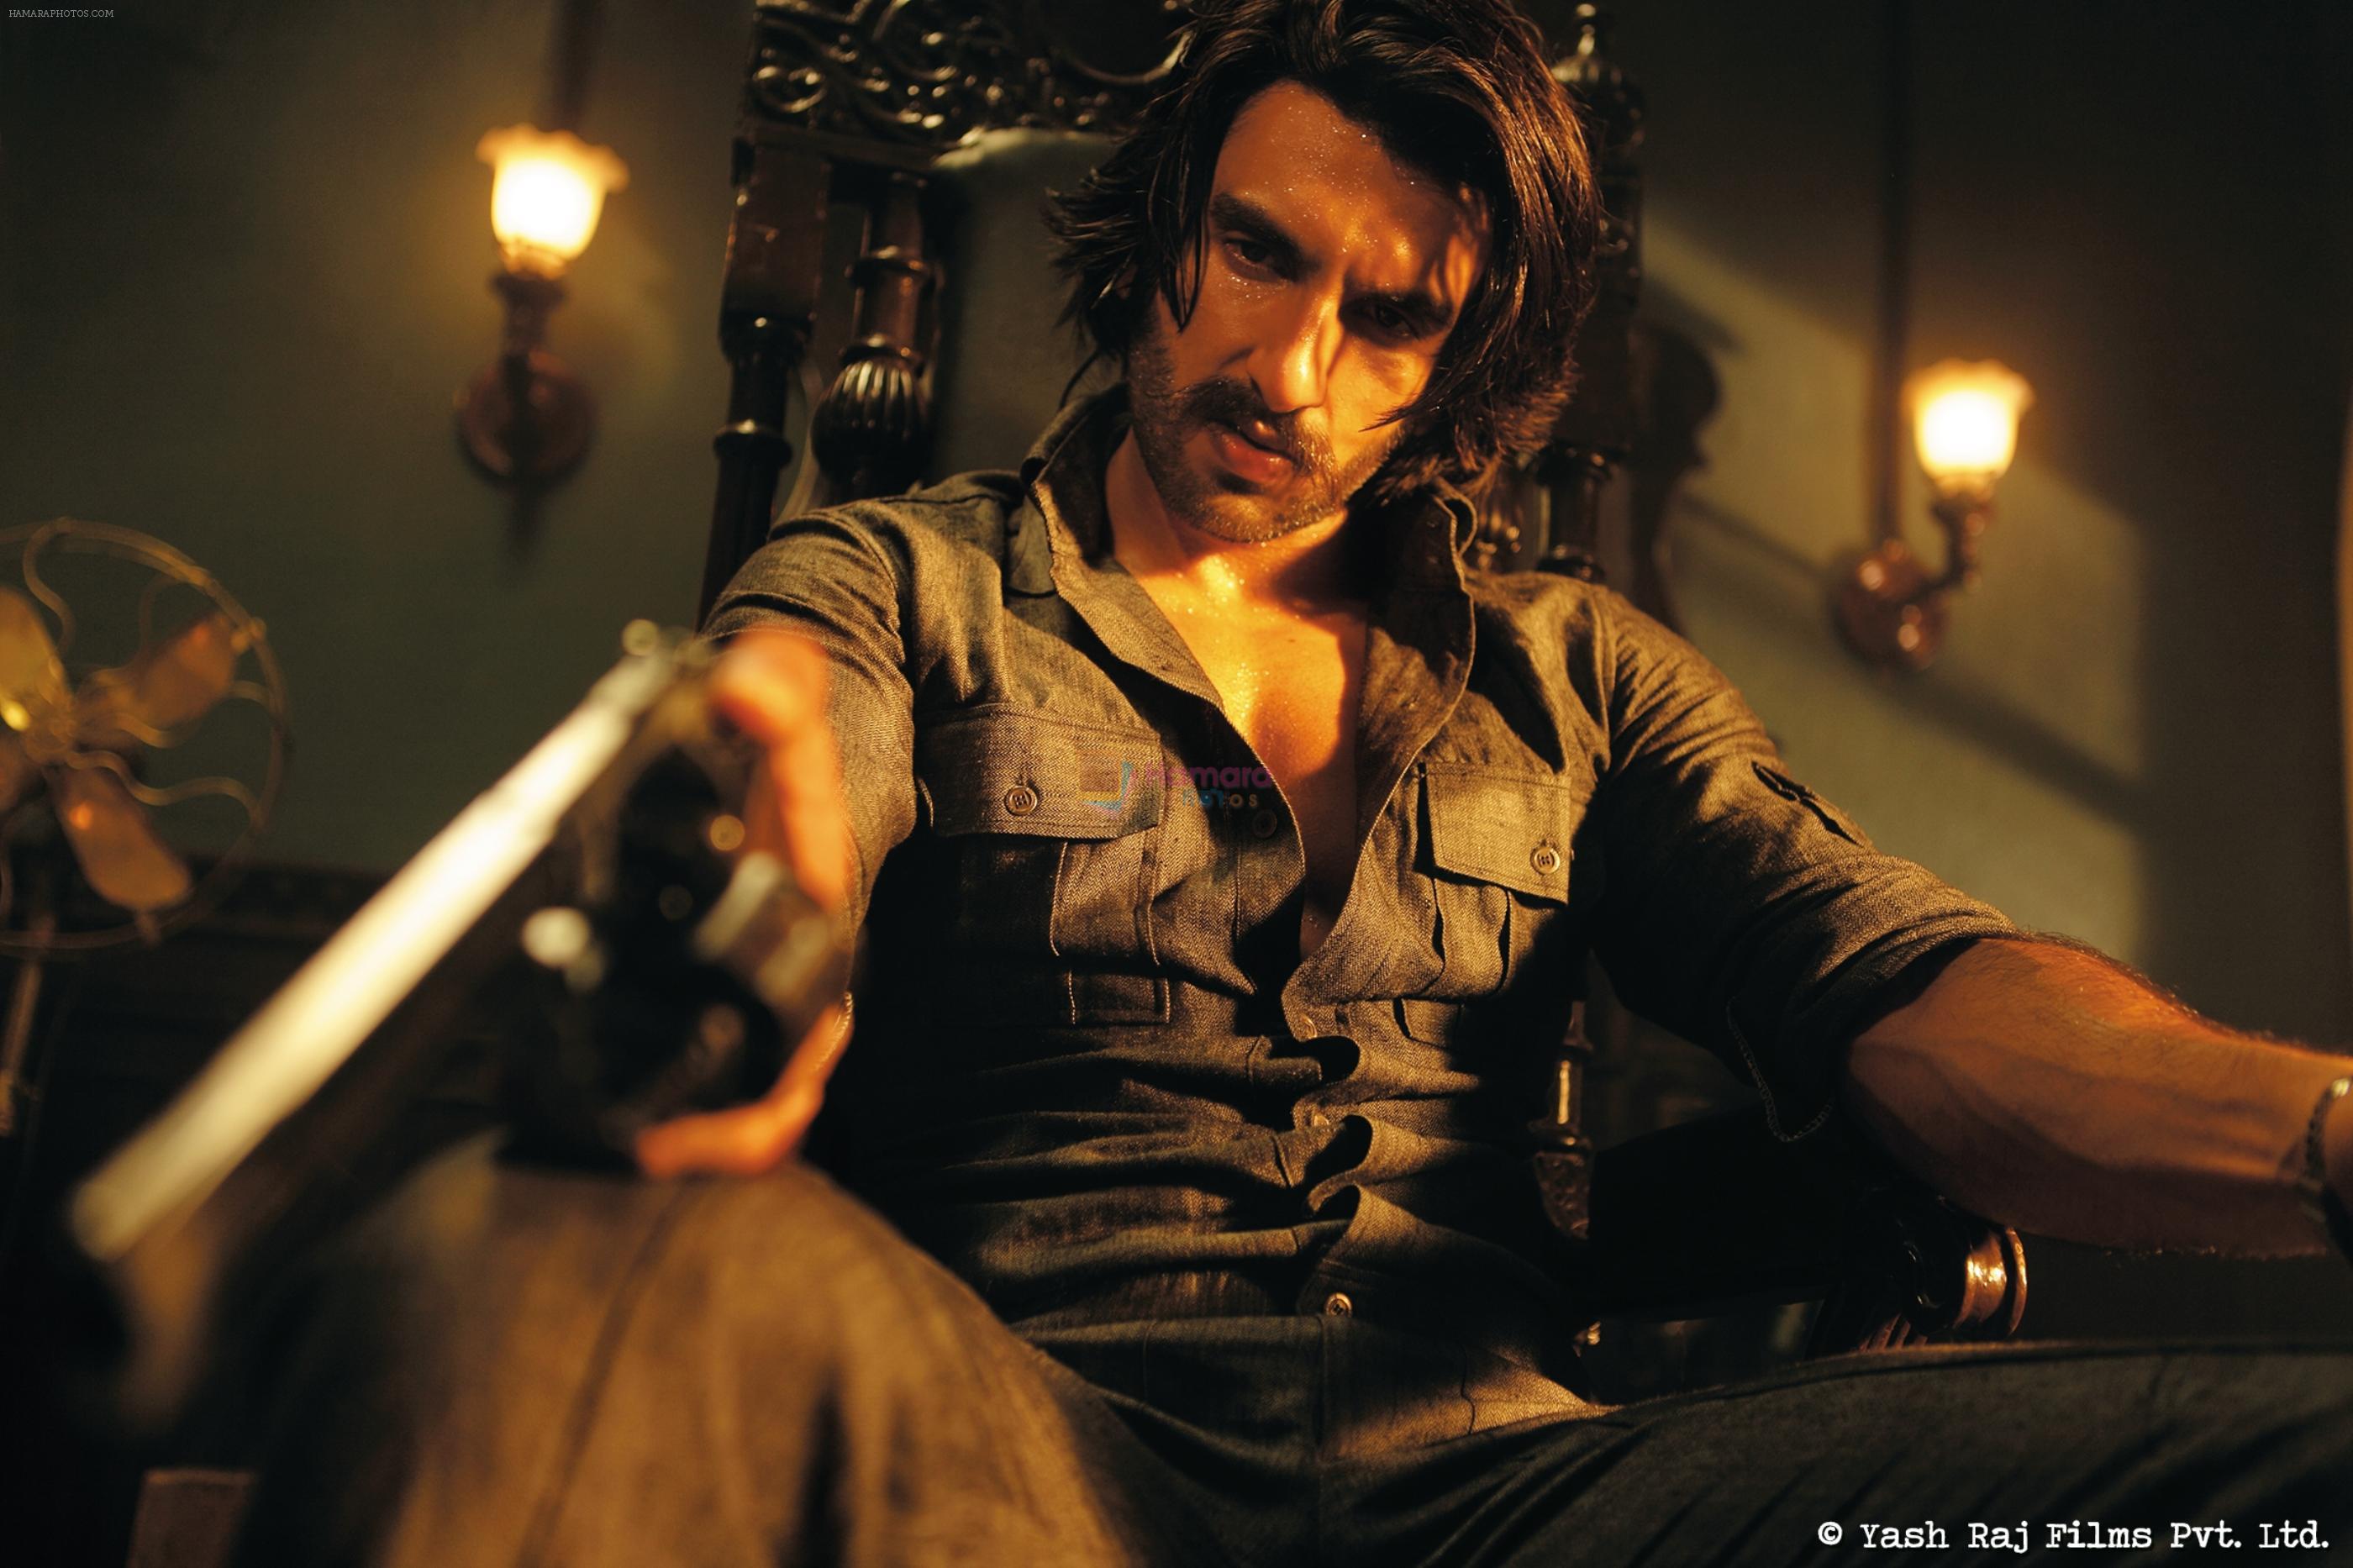 Ranveer Singh in the still from movie Gunday